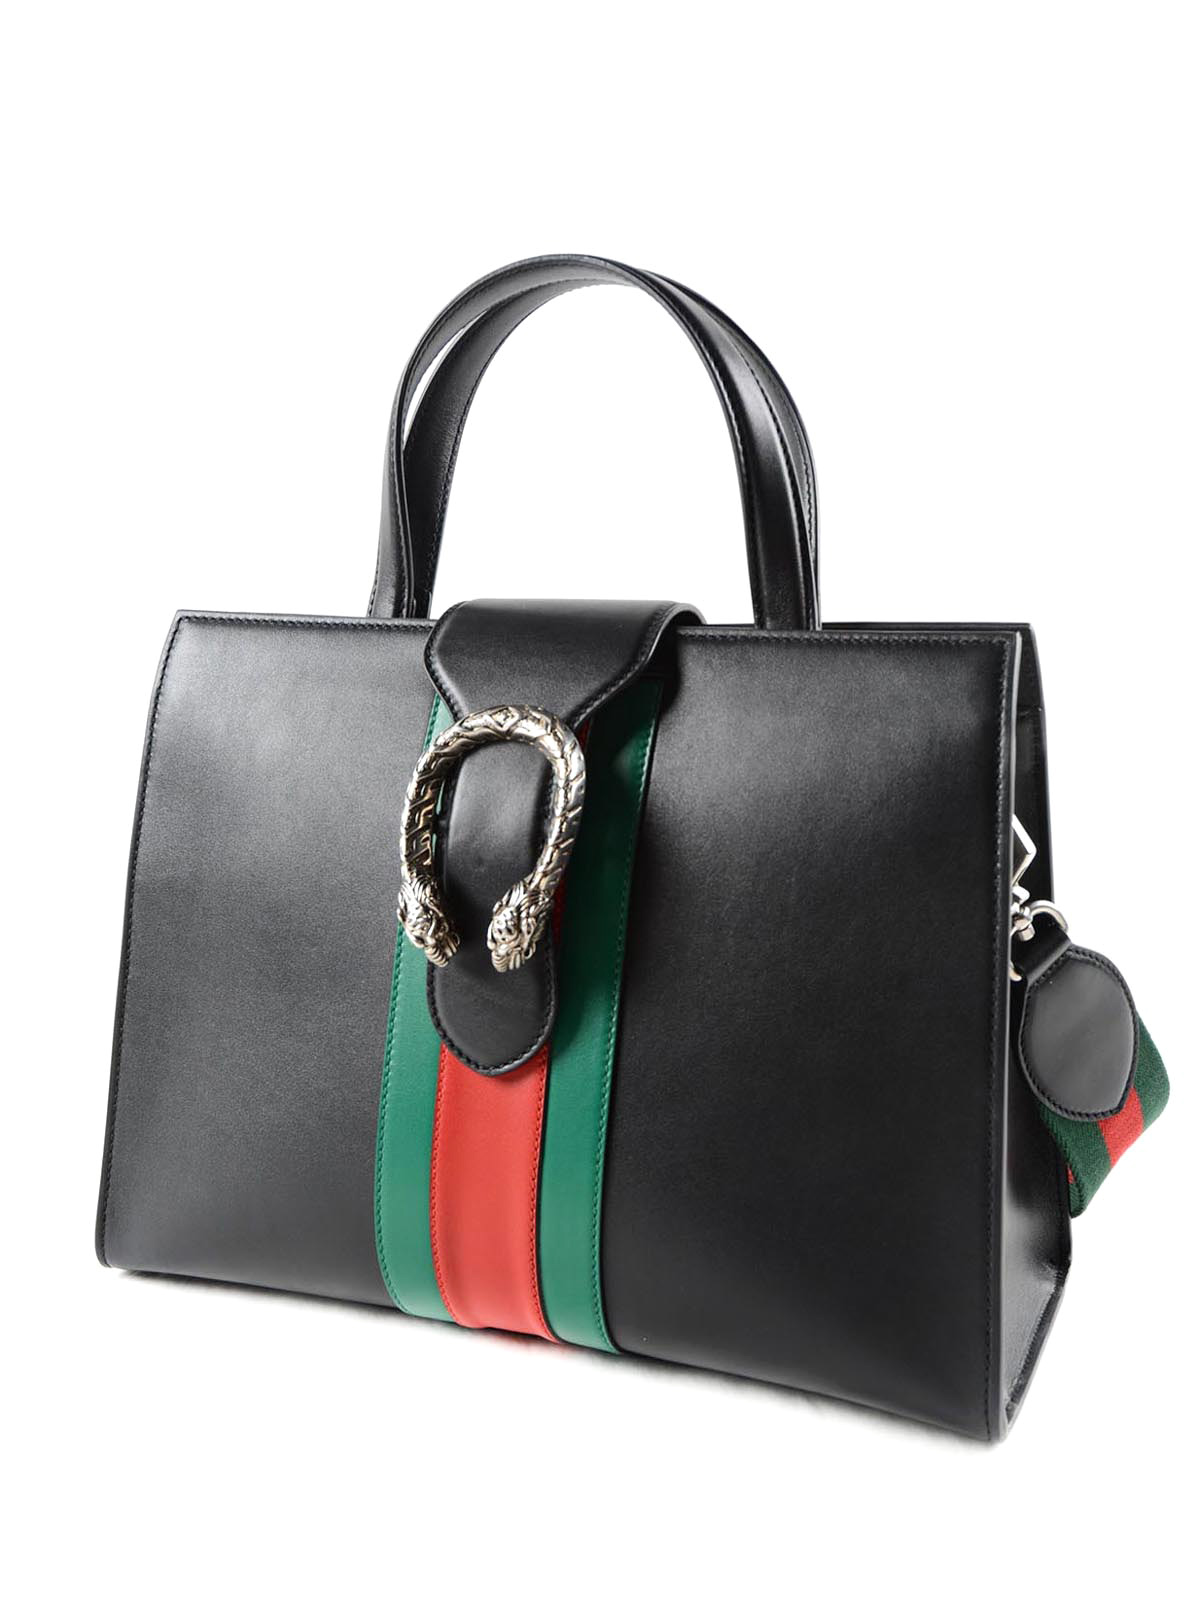 Gucci Dionysus Web detailed handbag totes  bags  